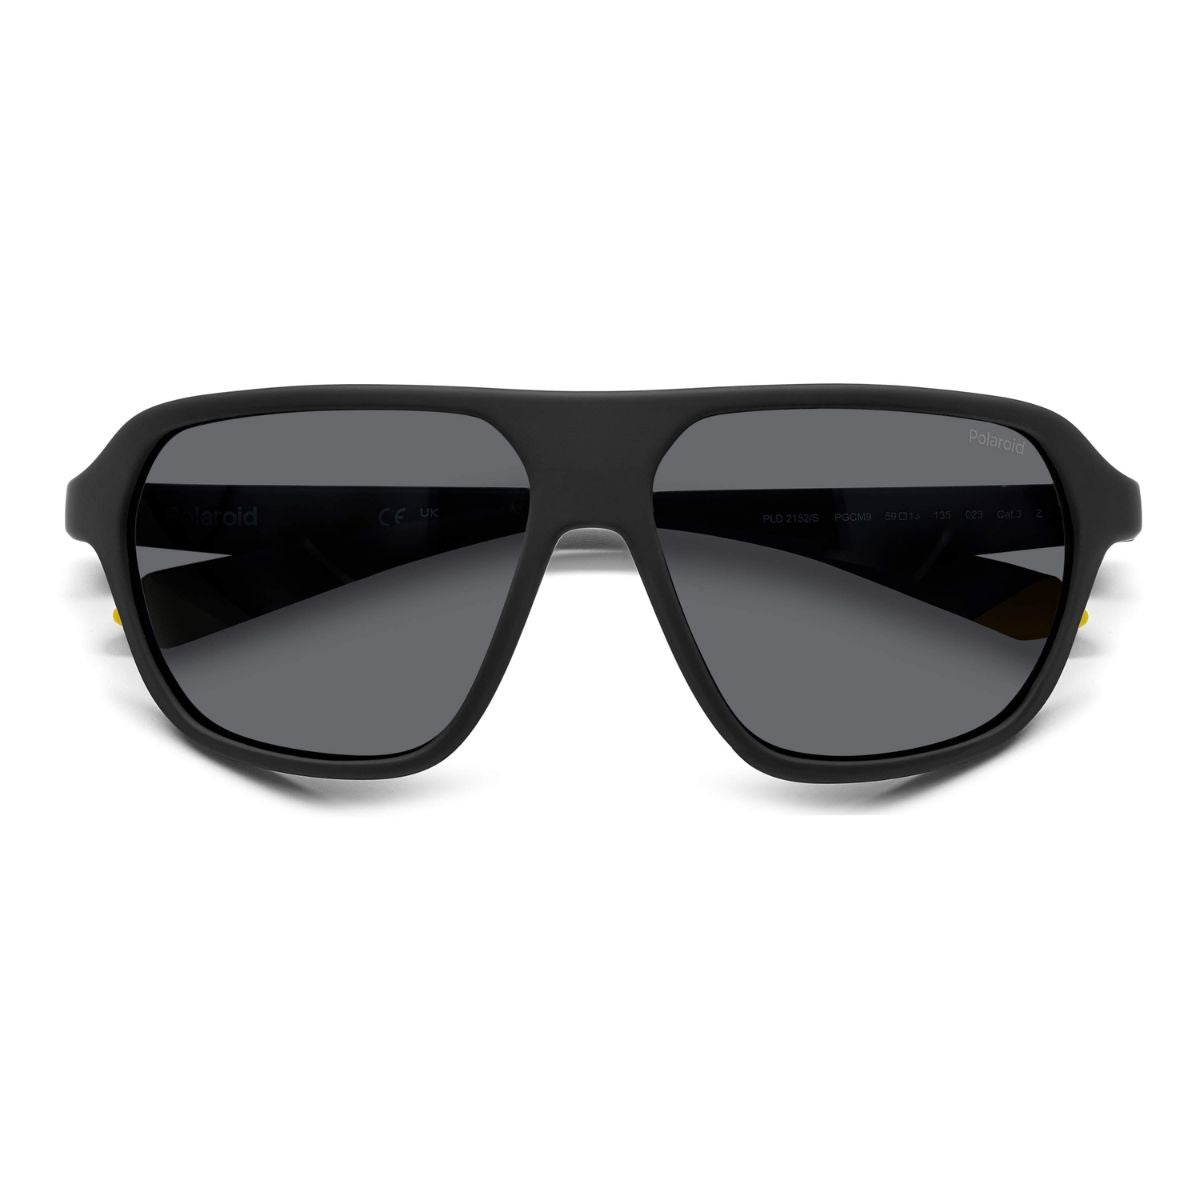 "Buy Trending Polaroid 2152 Rectangle Polarized Sunglasses For Unisex At Optorium"